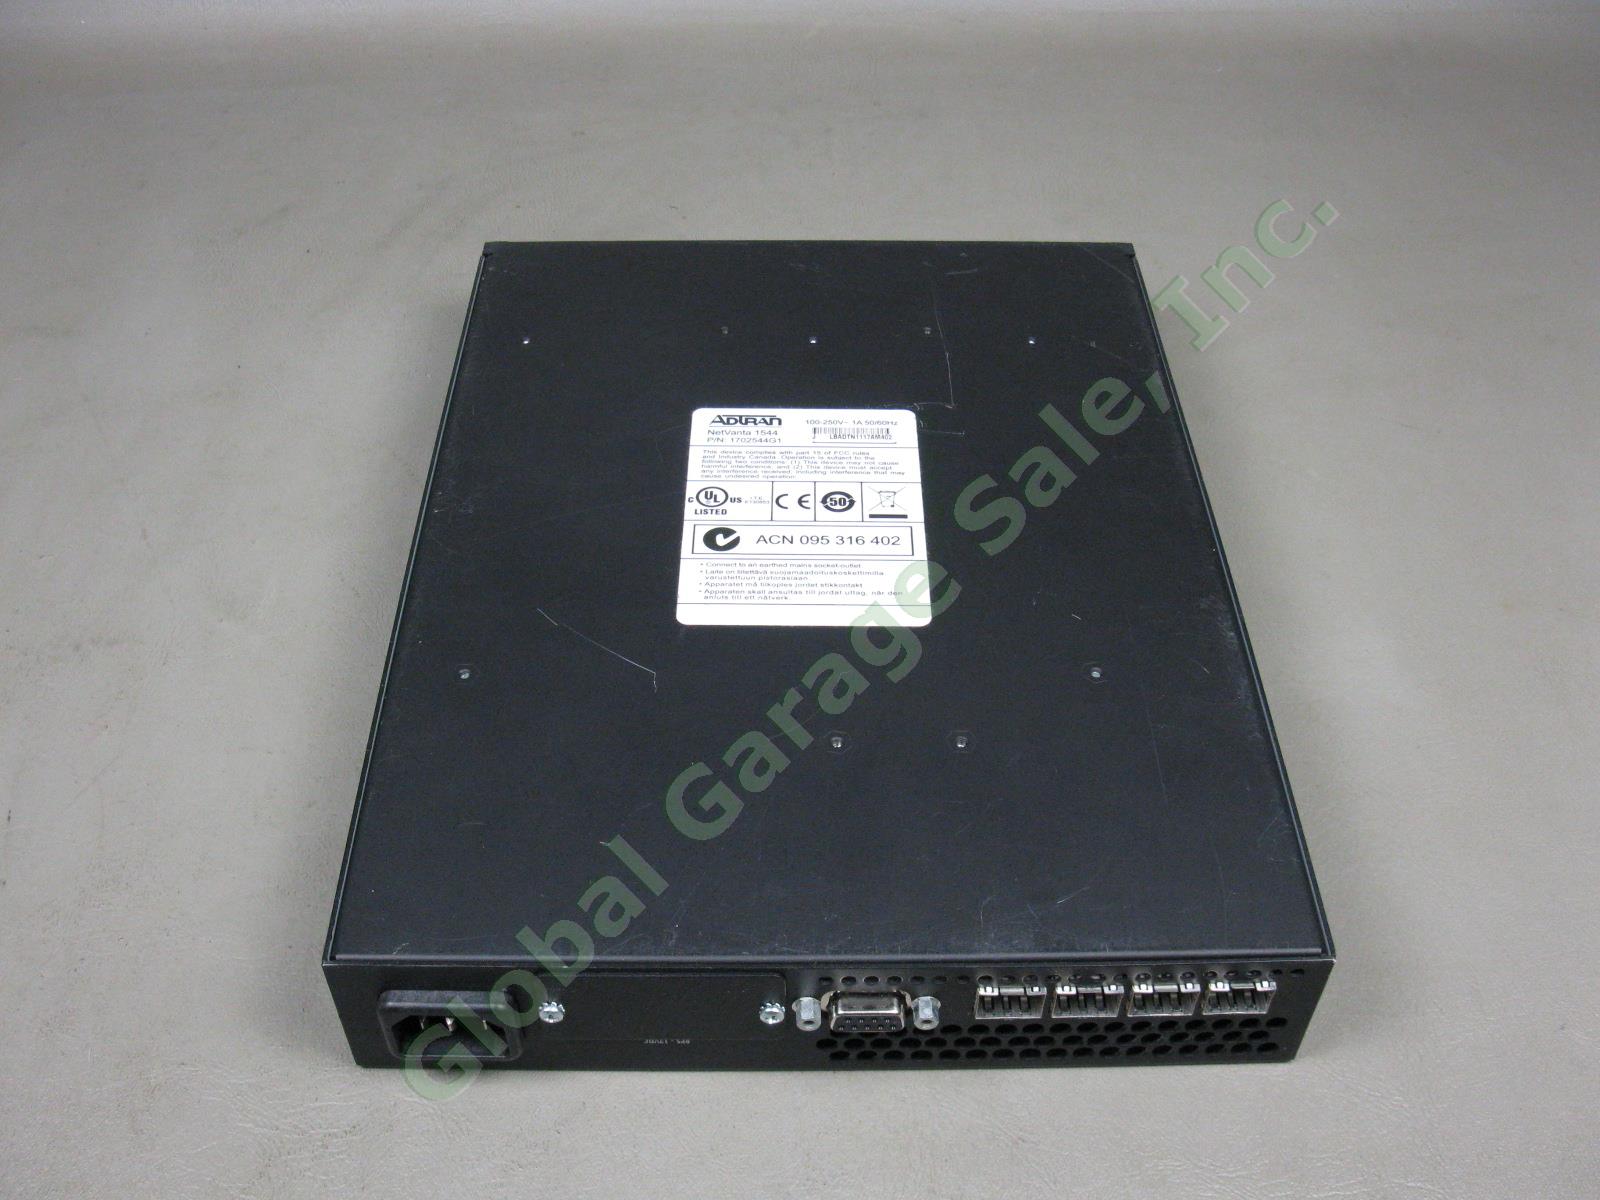 Adtran NetVanta 1544 24-Port Managed Gigabit Ethernet Switch 1702544G1 NORESERVE 5